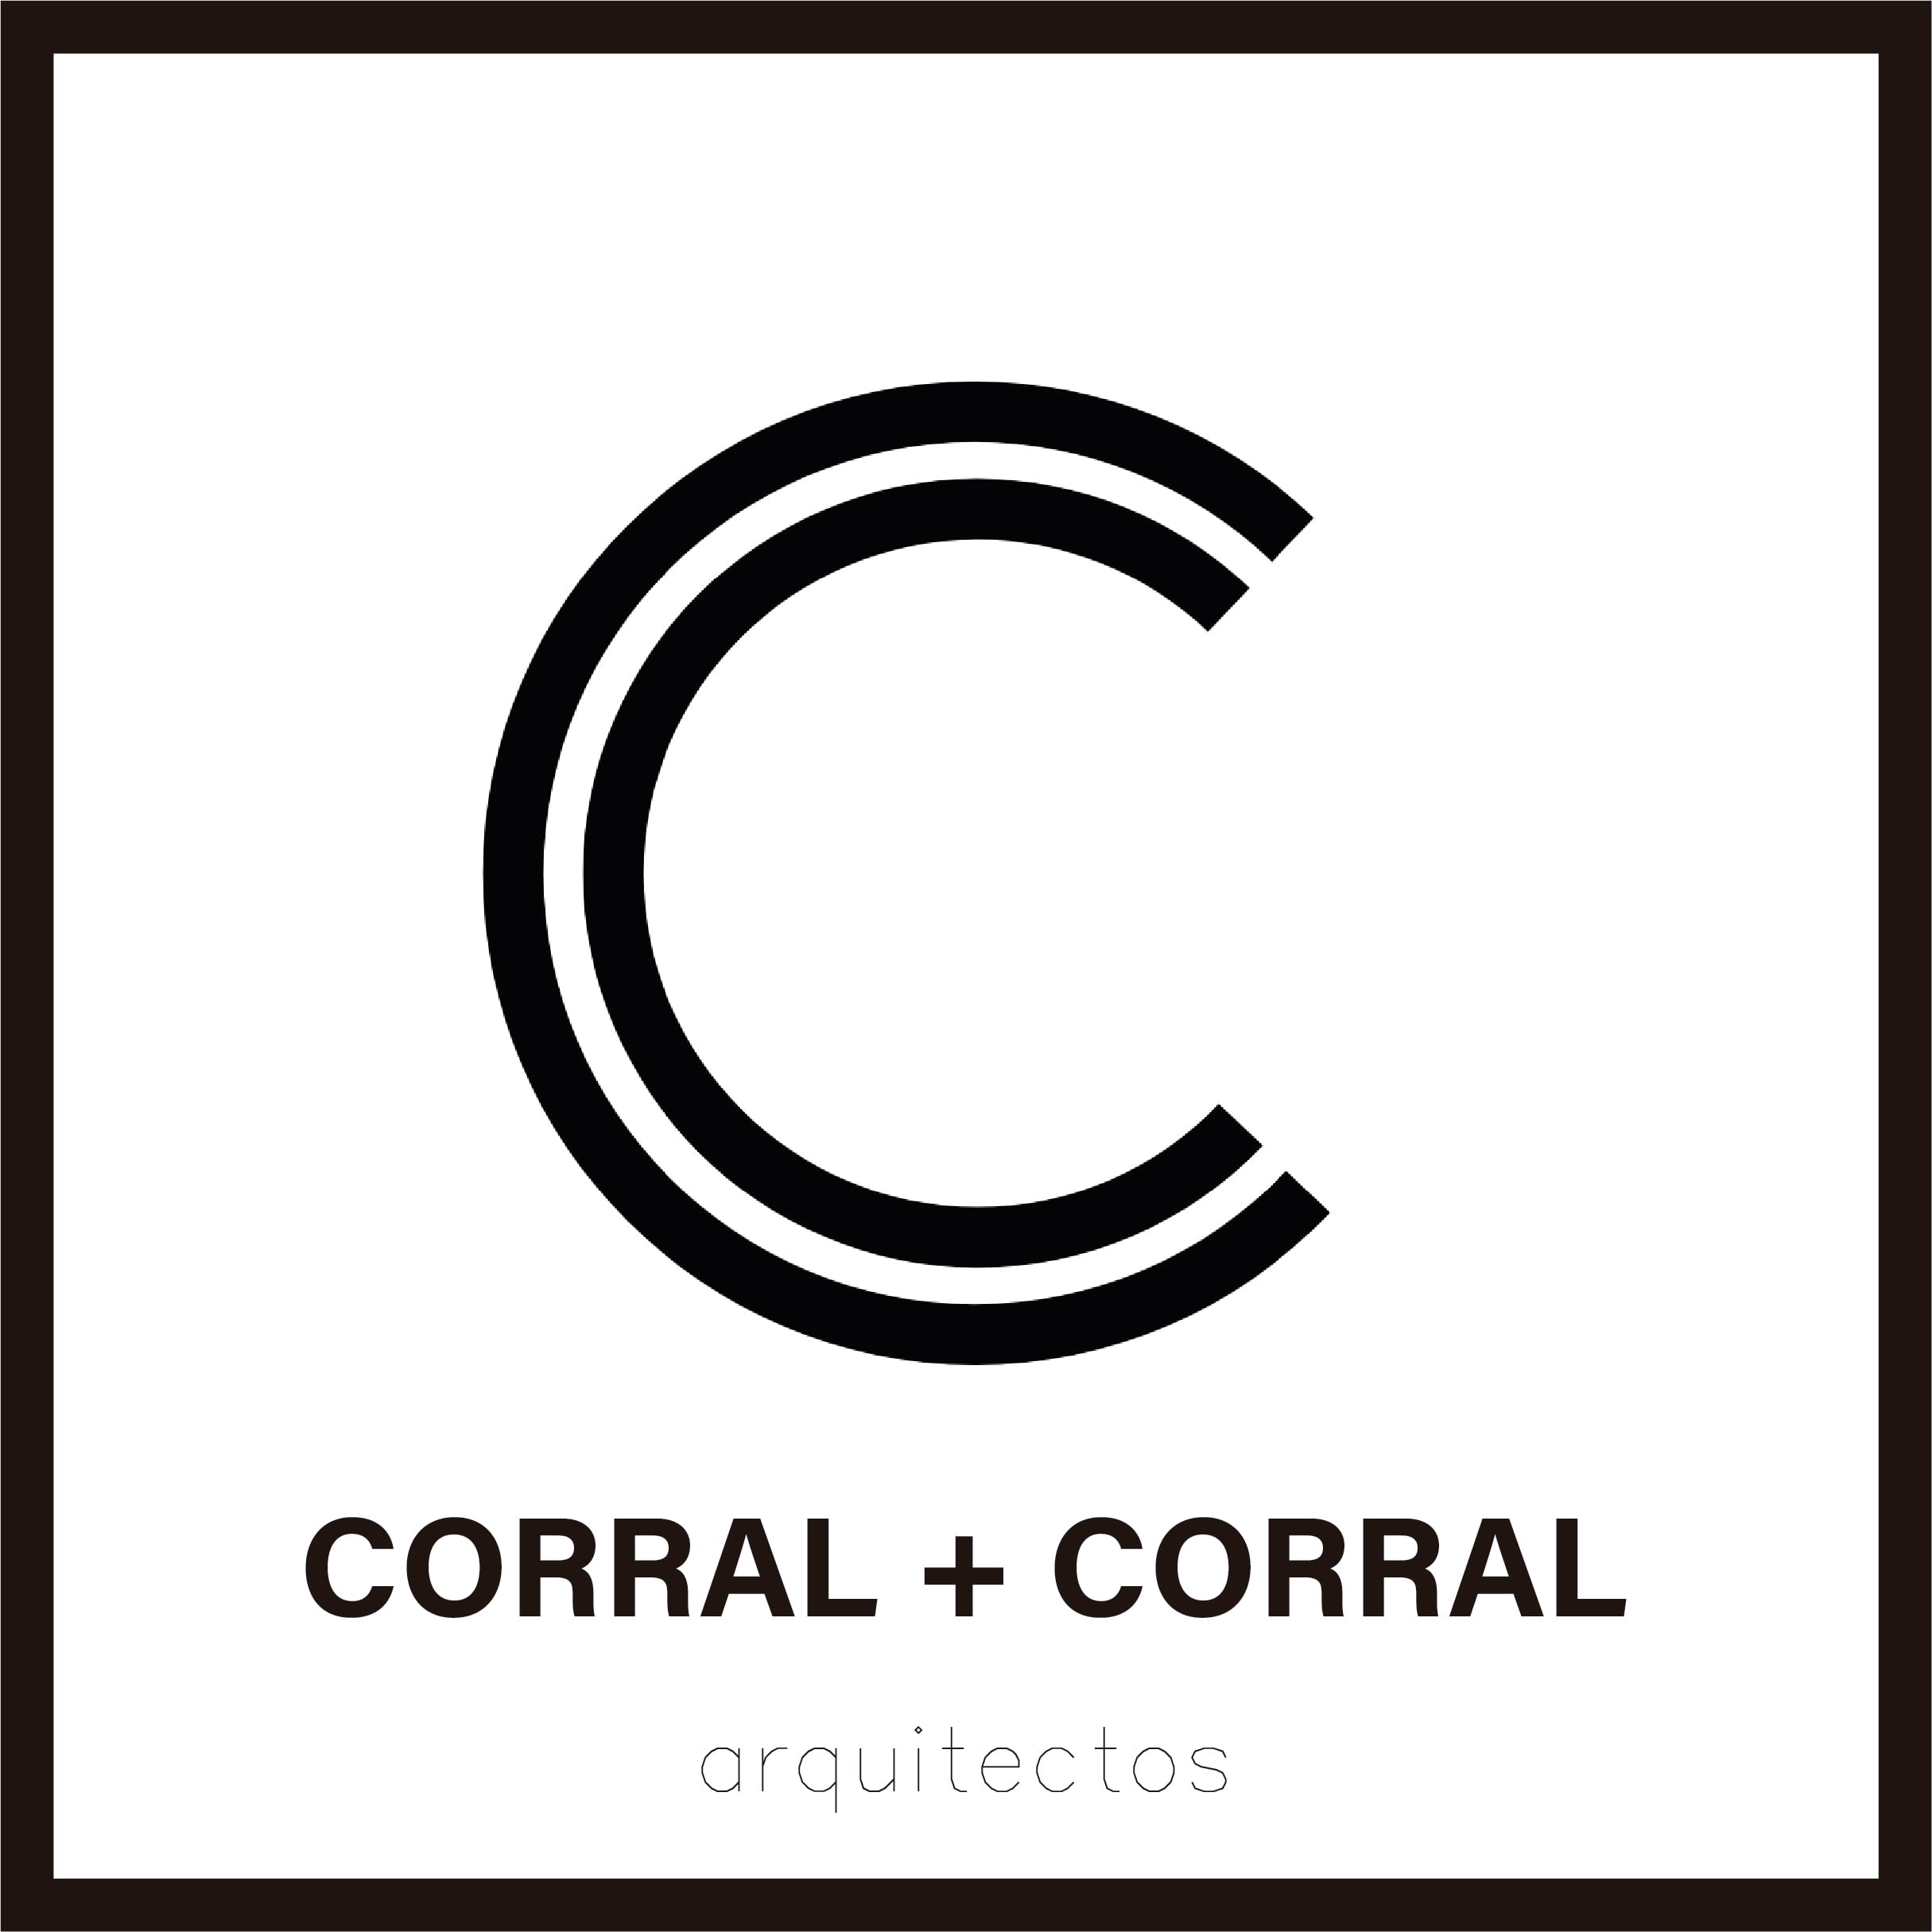 Corral + Corral